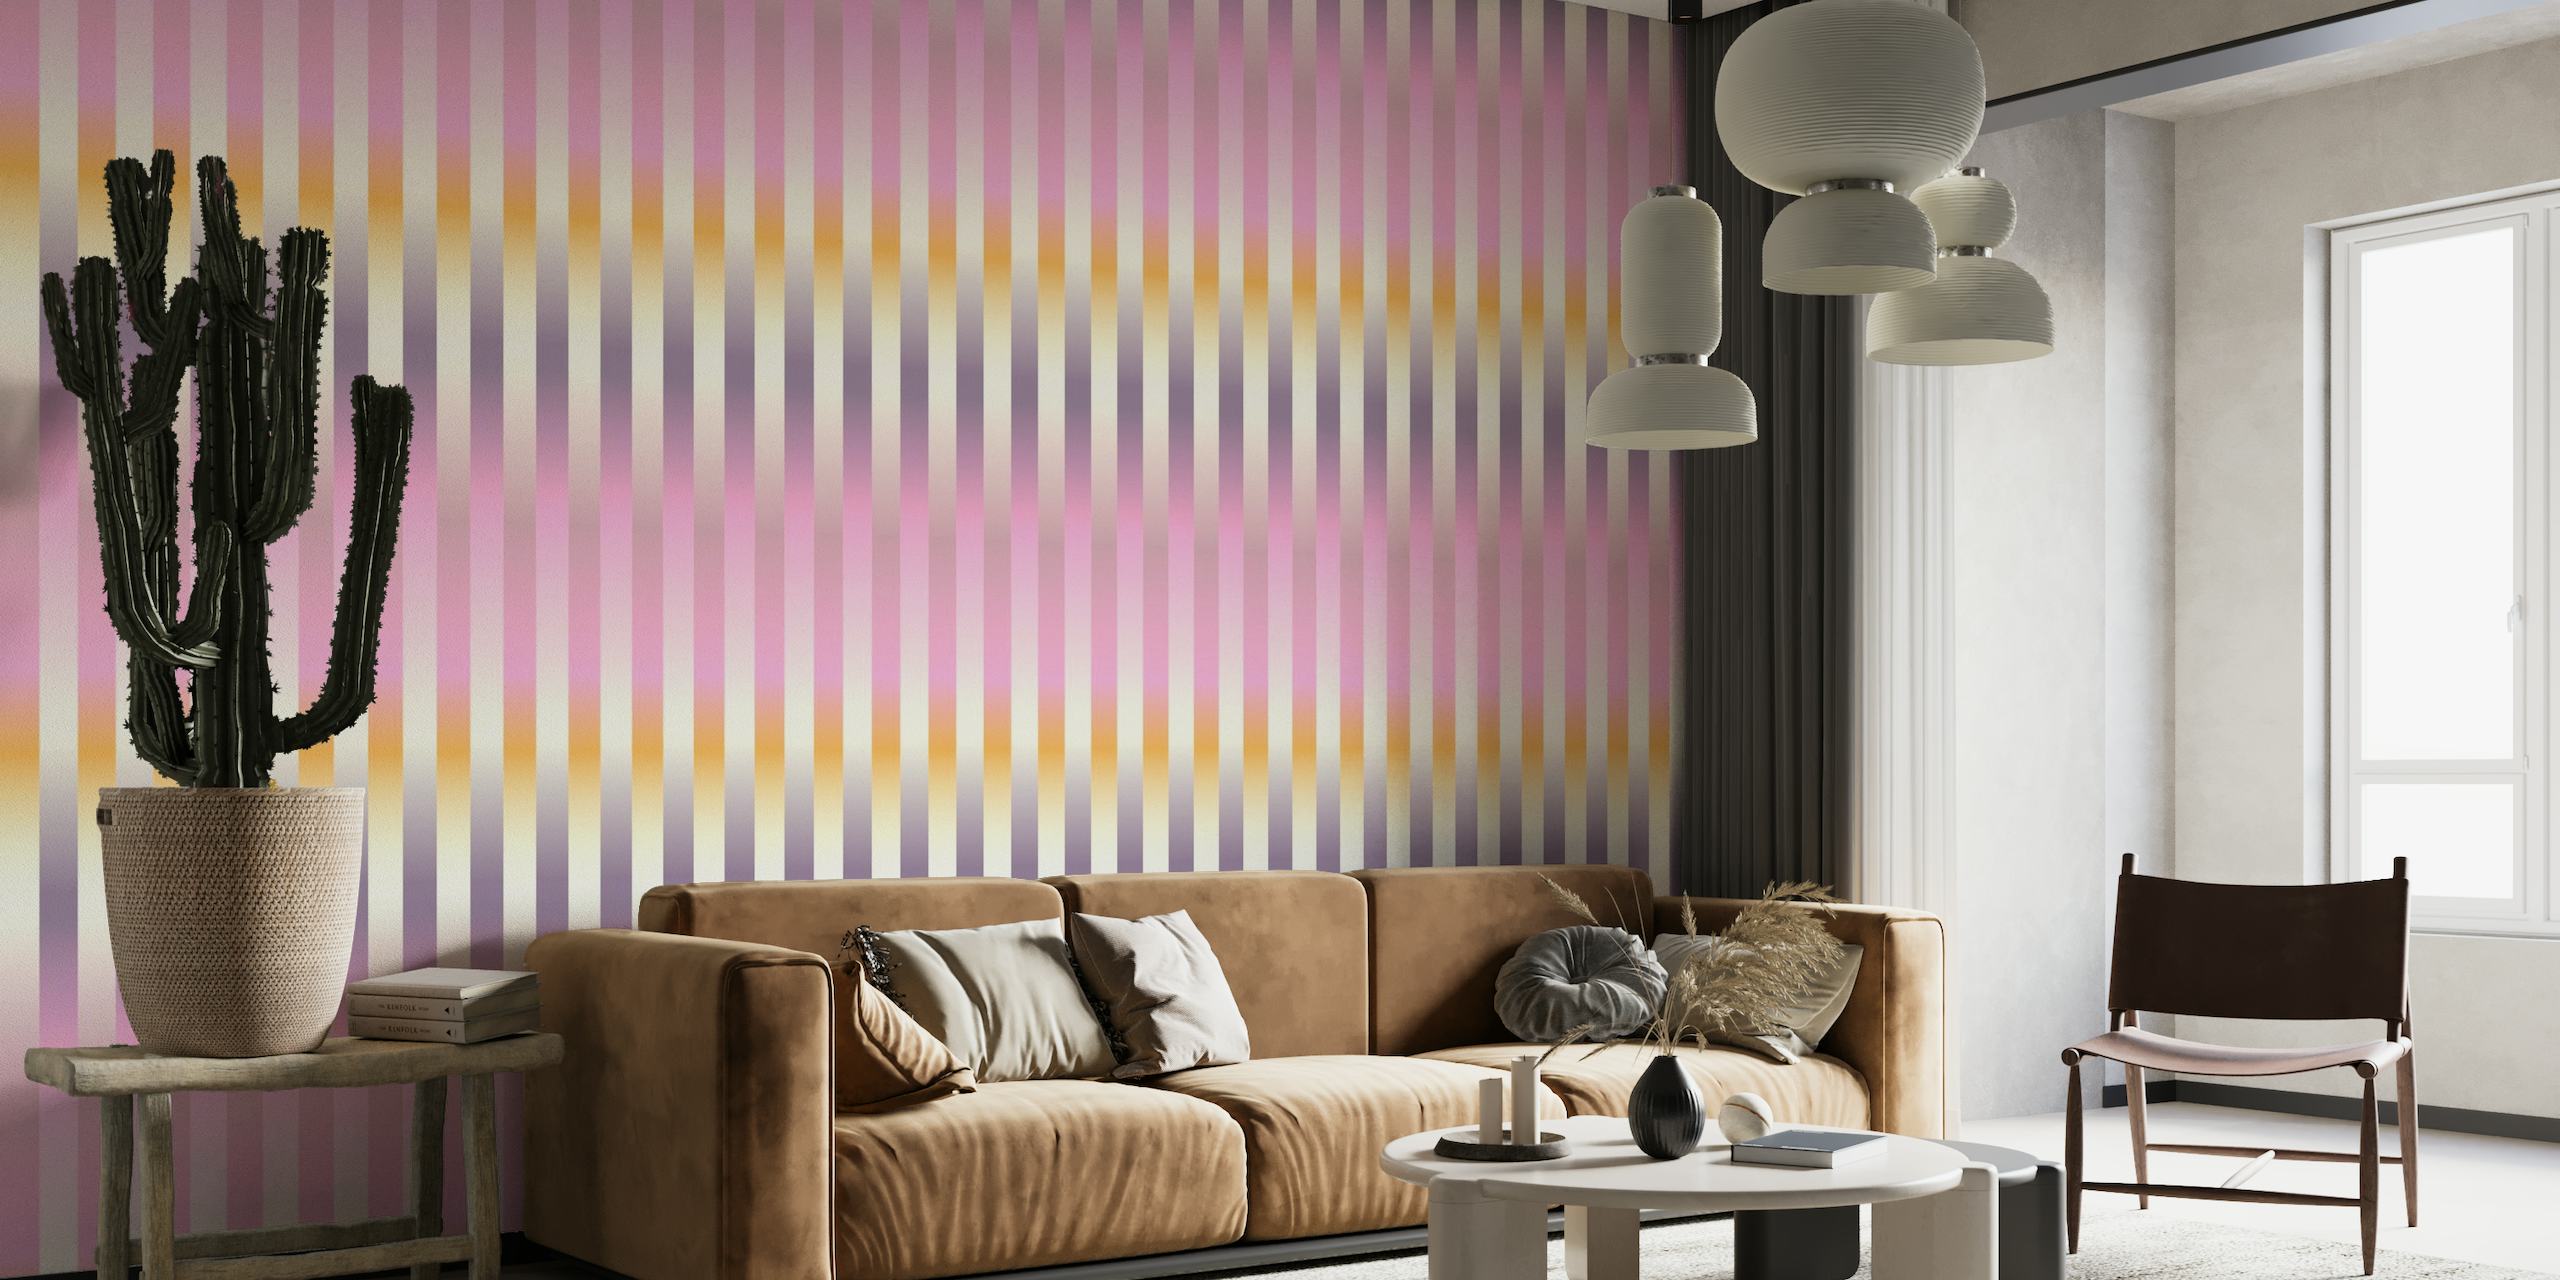 Blurred Stripes lilac behang